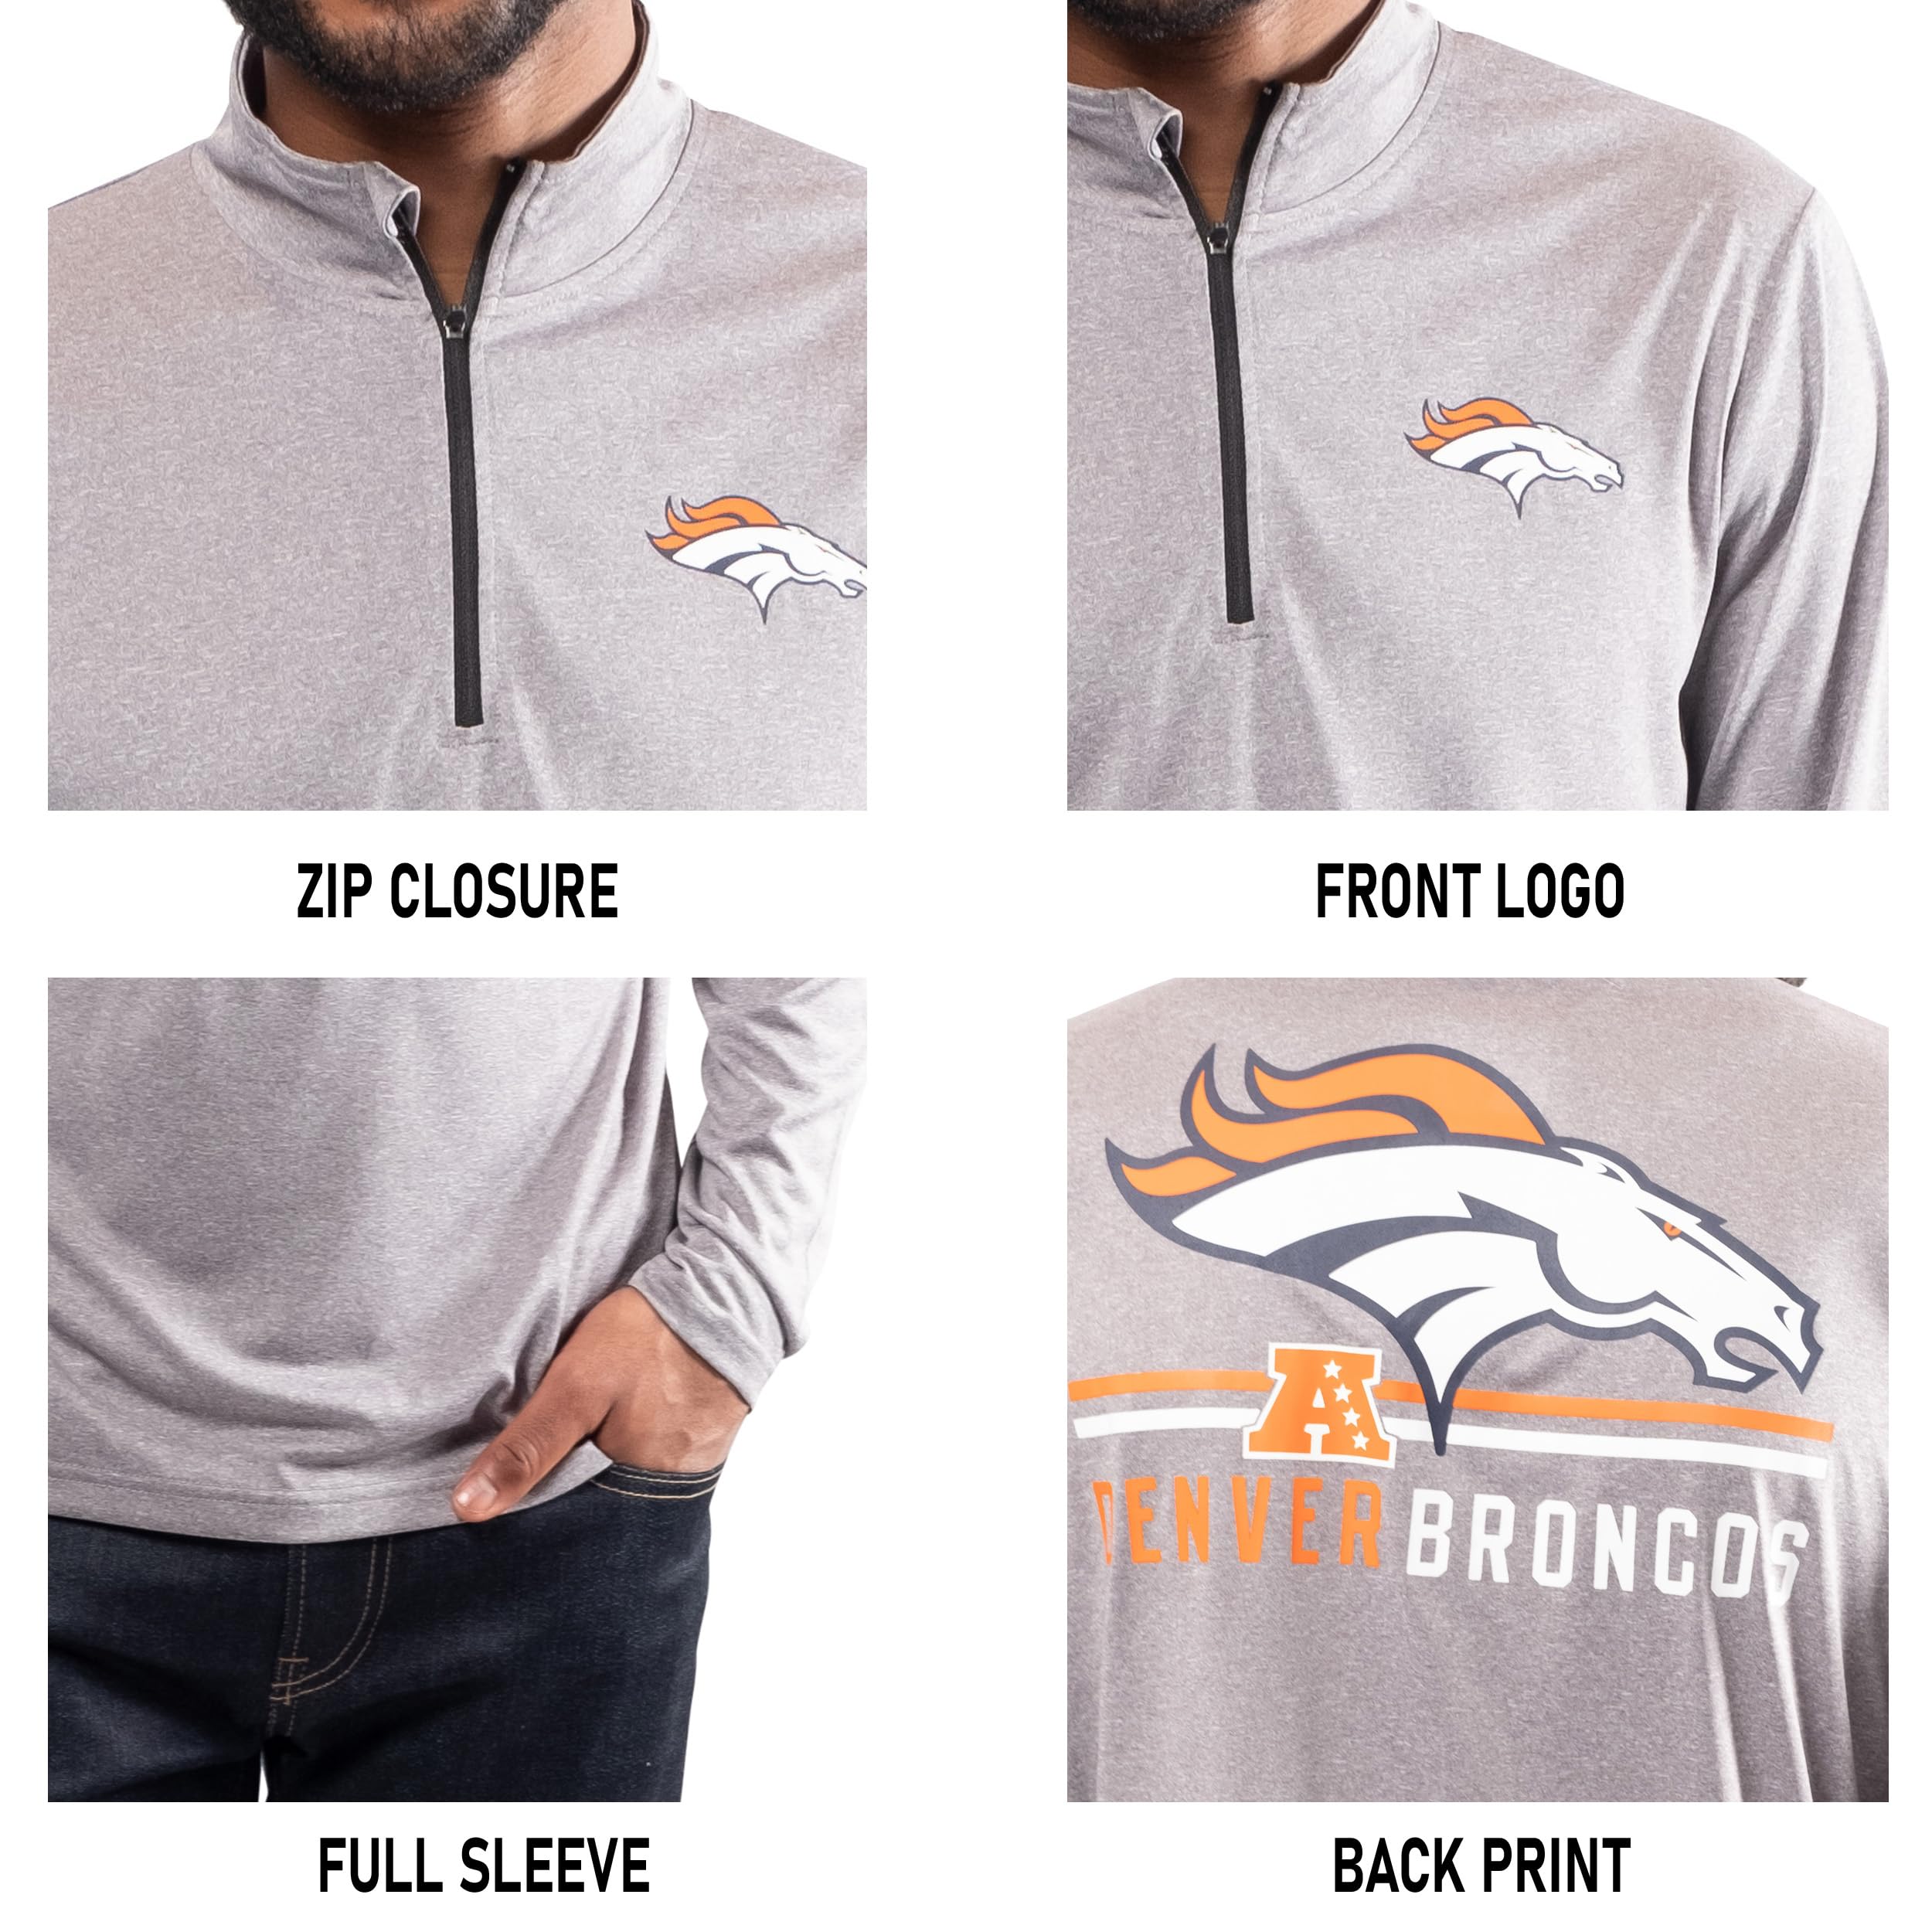 Ultra Game NFL Denver Broncos Mens Super Soft Quarter Zip Long Sleeve T-Shirt|Denver Broncos